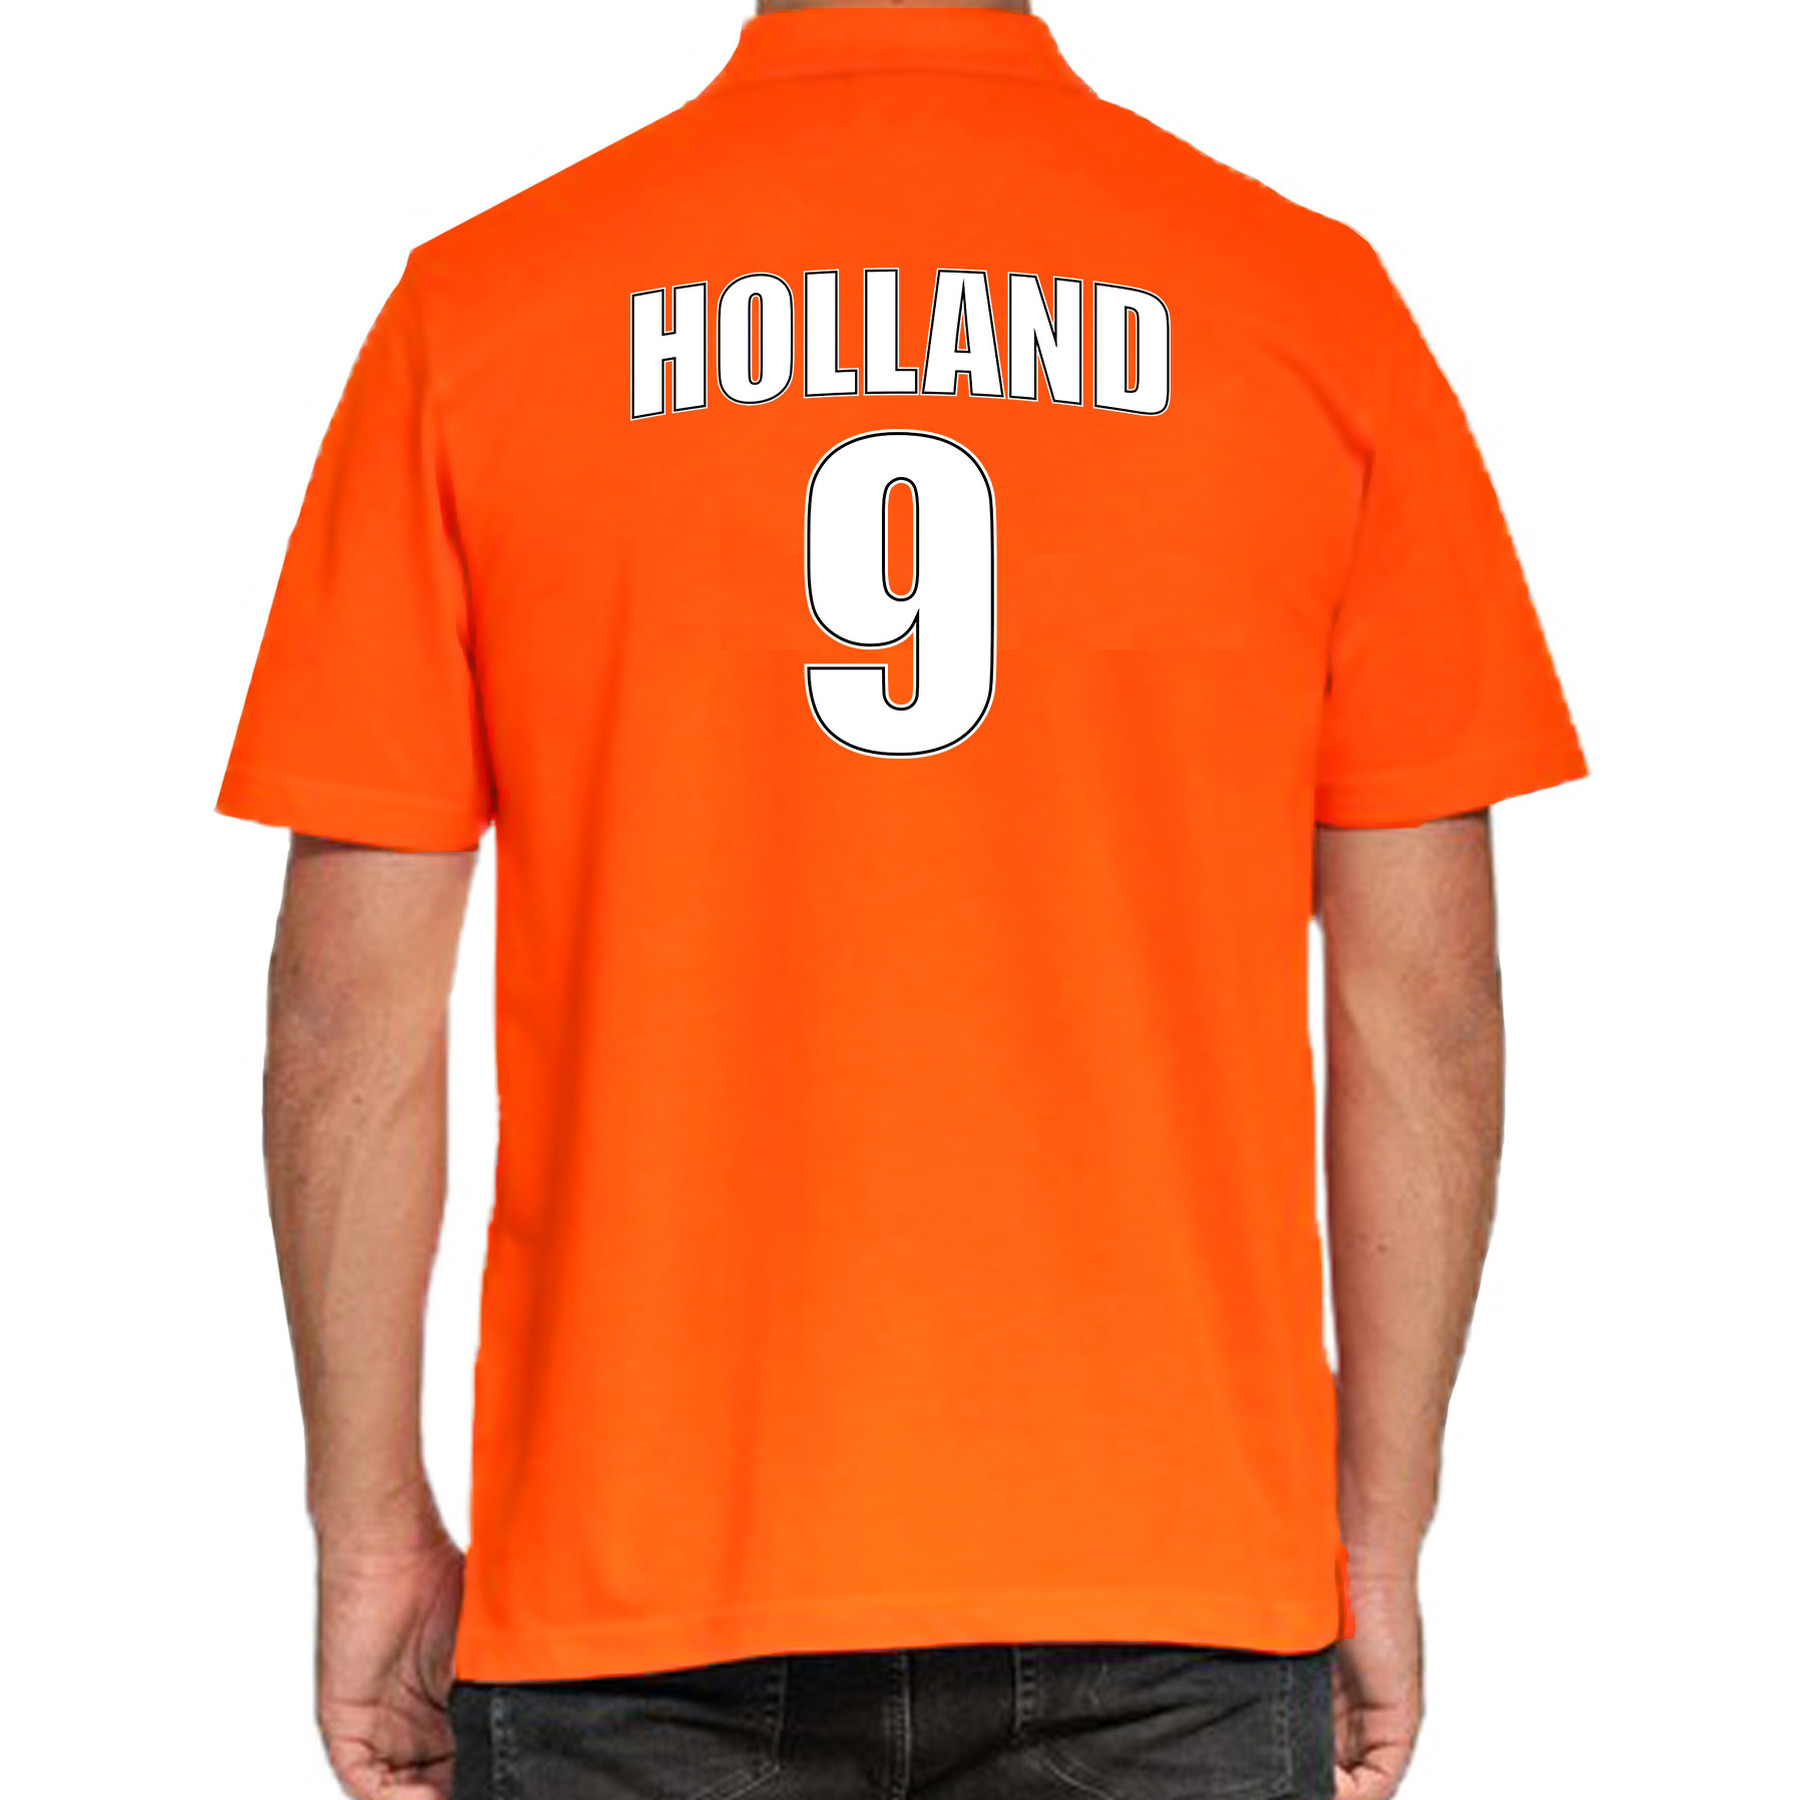 Oranje supporter poloshirt met rugnummer 9 - Holland - Nederland fan shirt voor heren